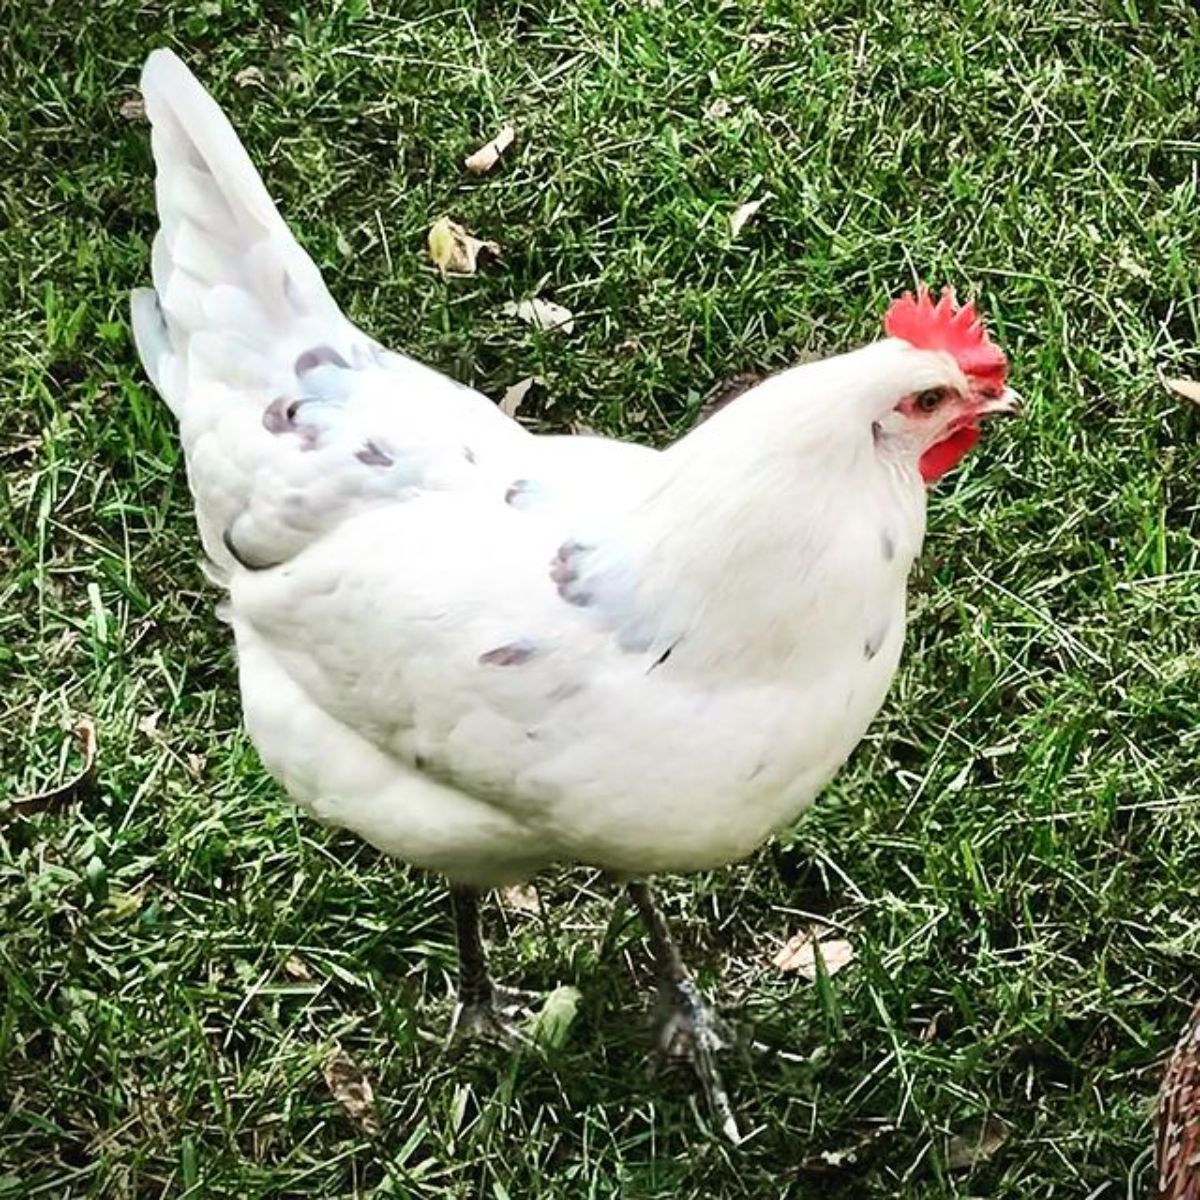 An adorable Austra White Chicken on green grass.